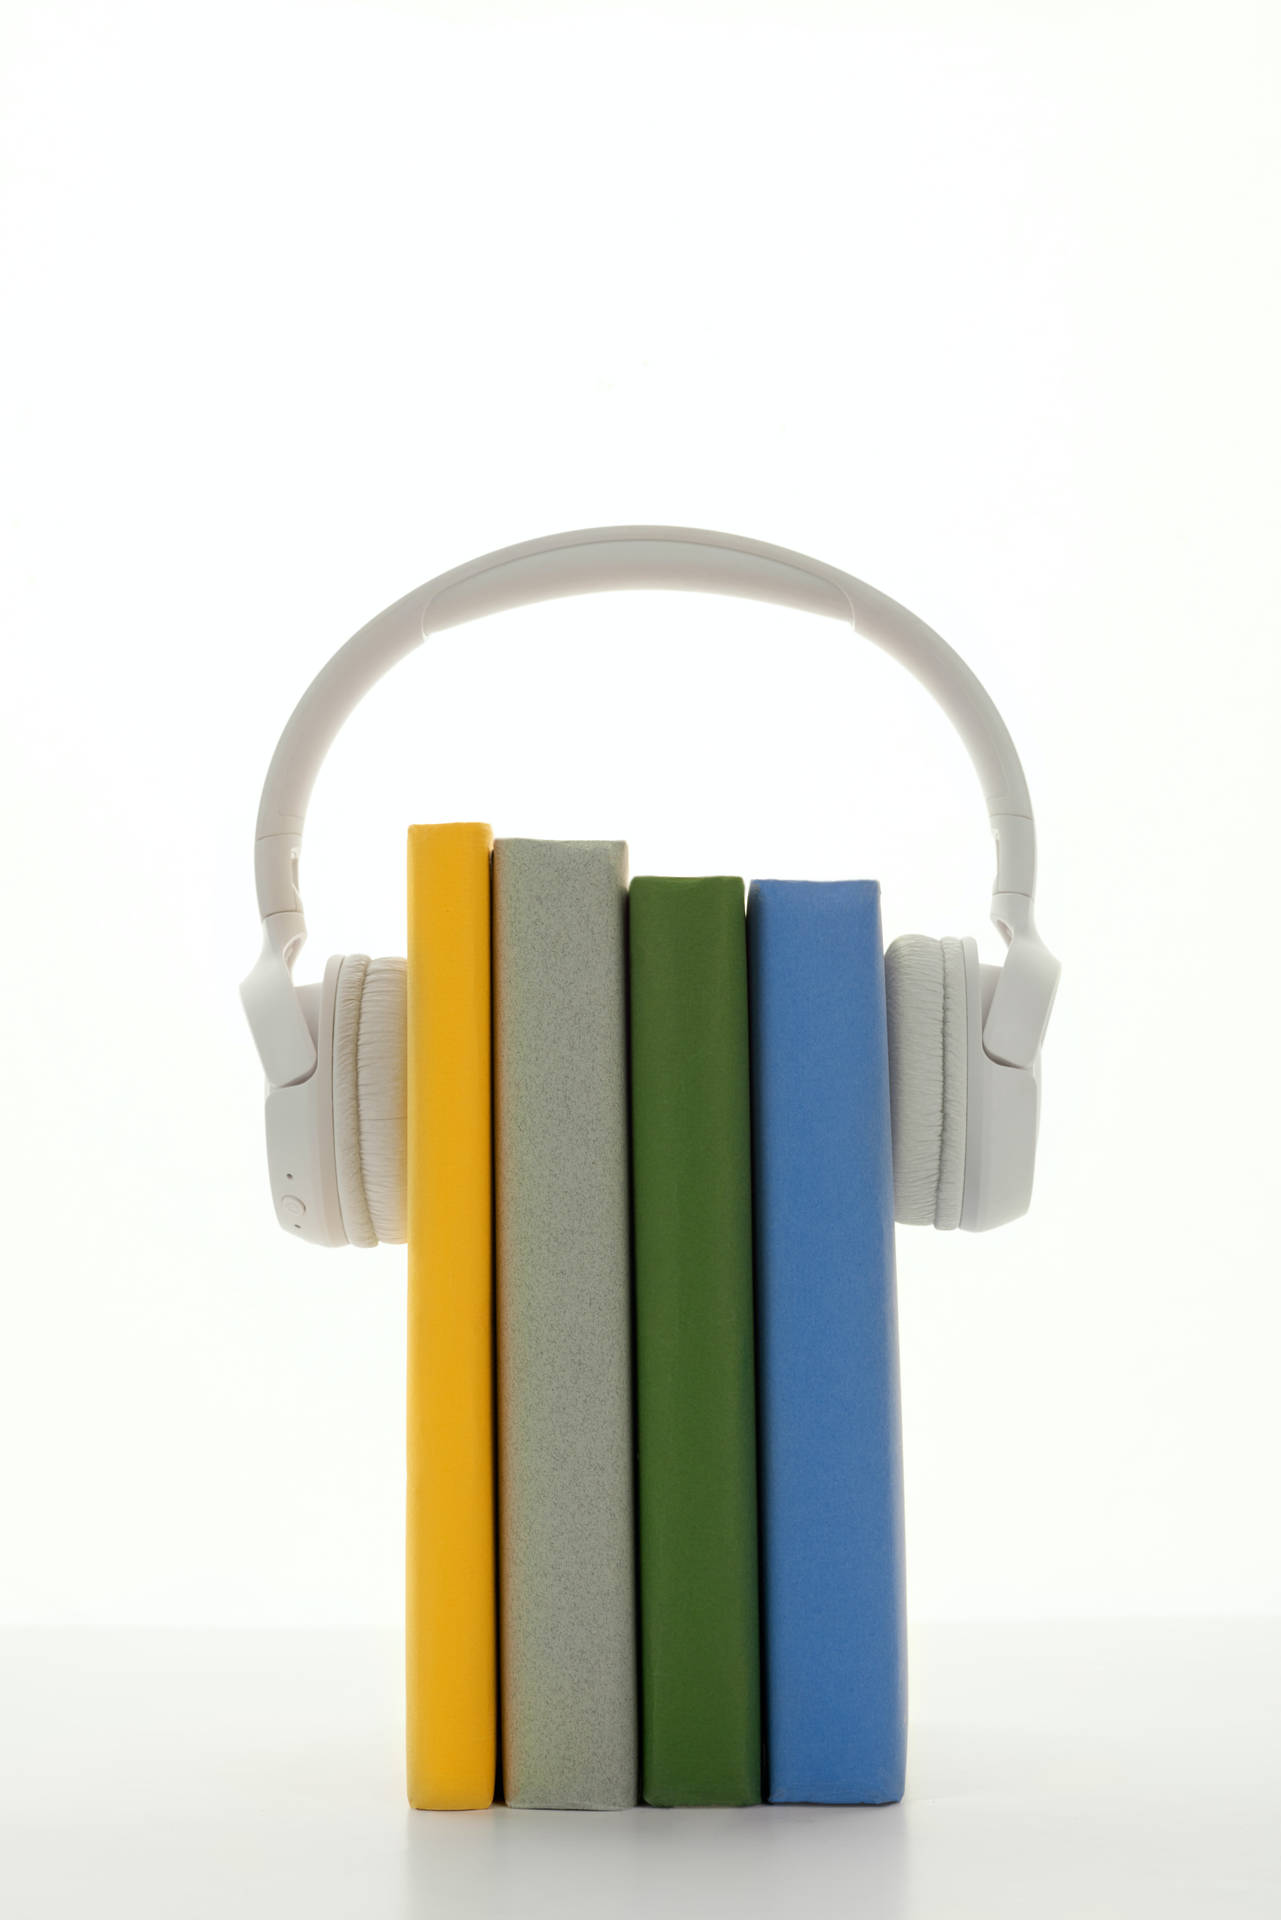 Study Motivation Books And Headphones Wallpaper